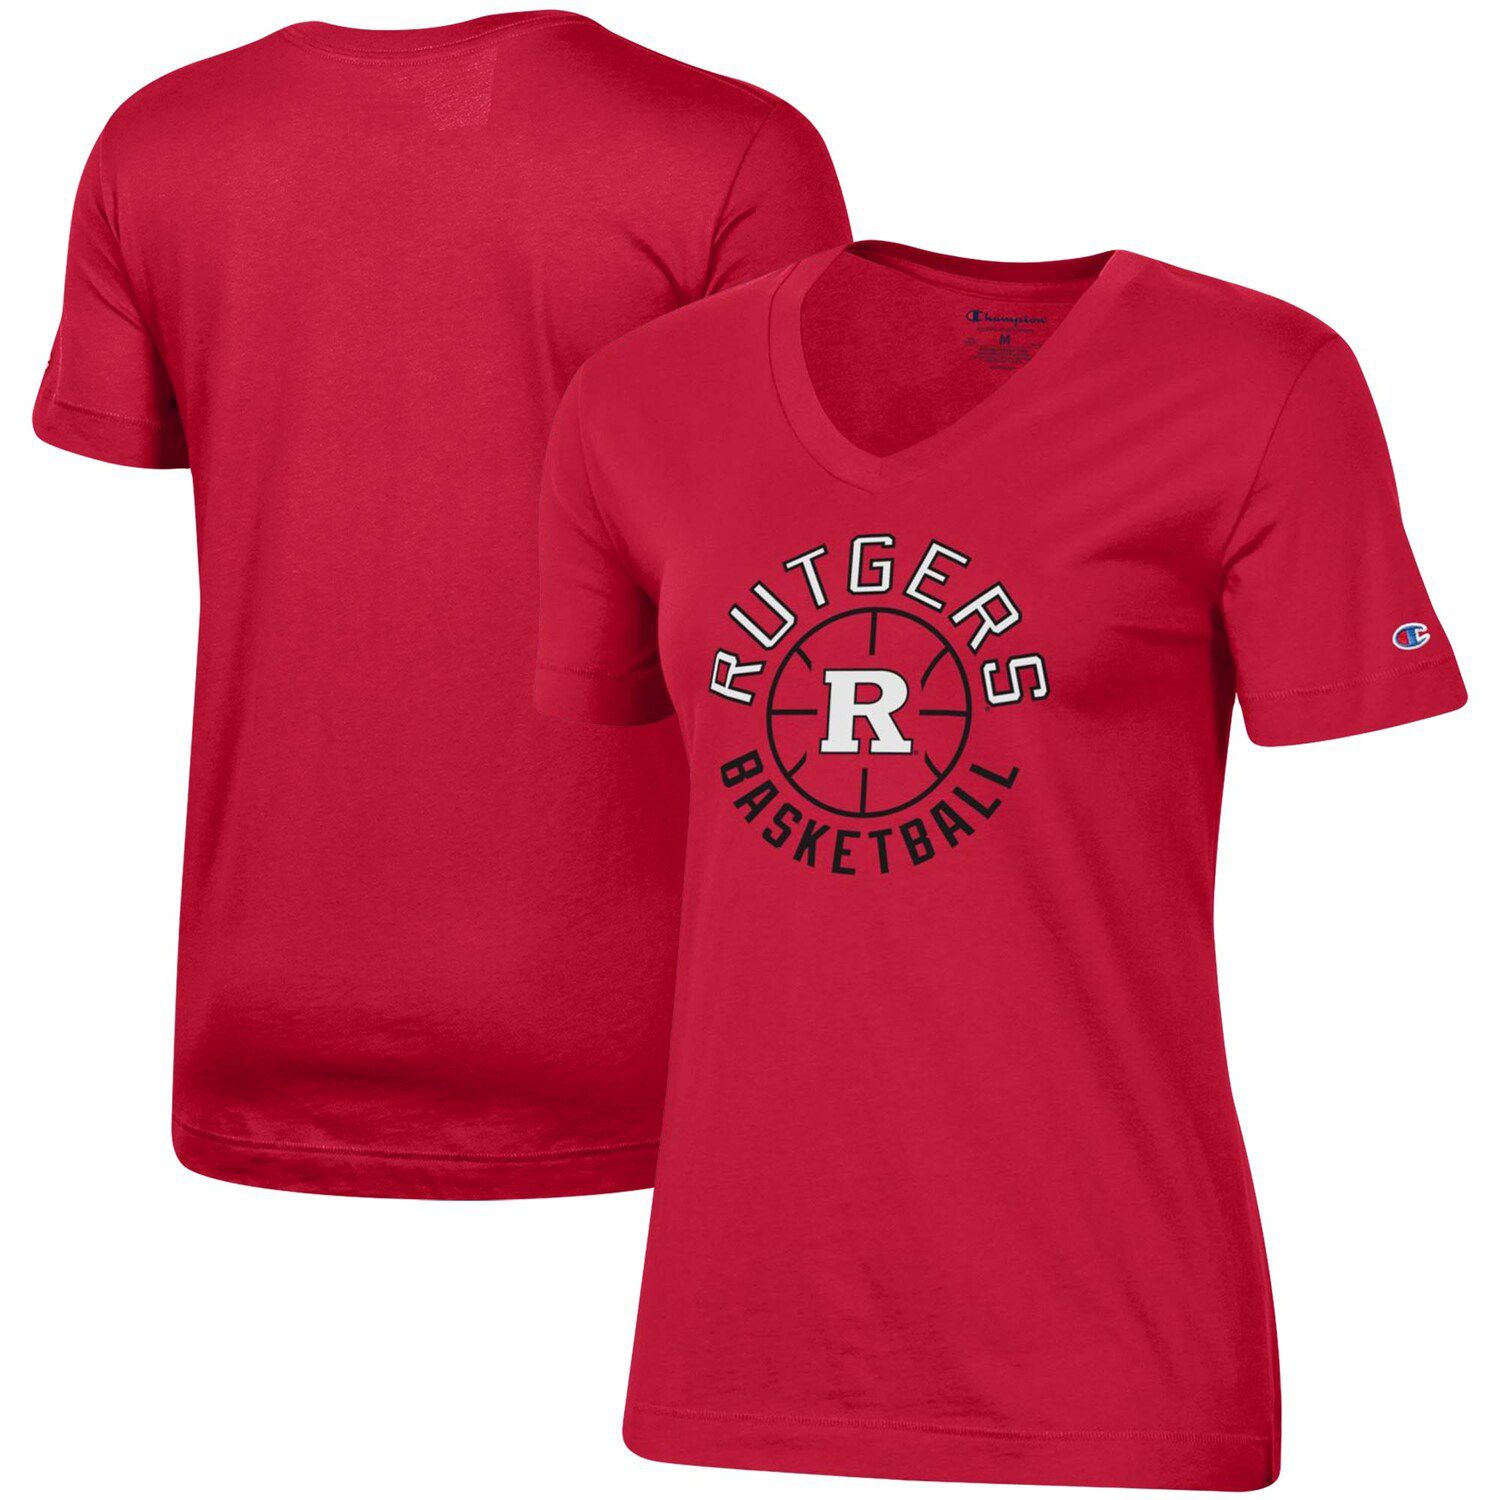 Rutgers Scarlet Knights NCAA champions basketball jersey